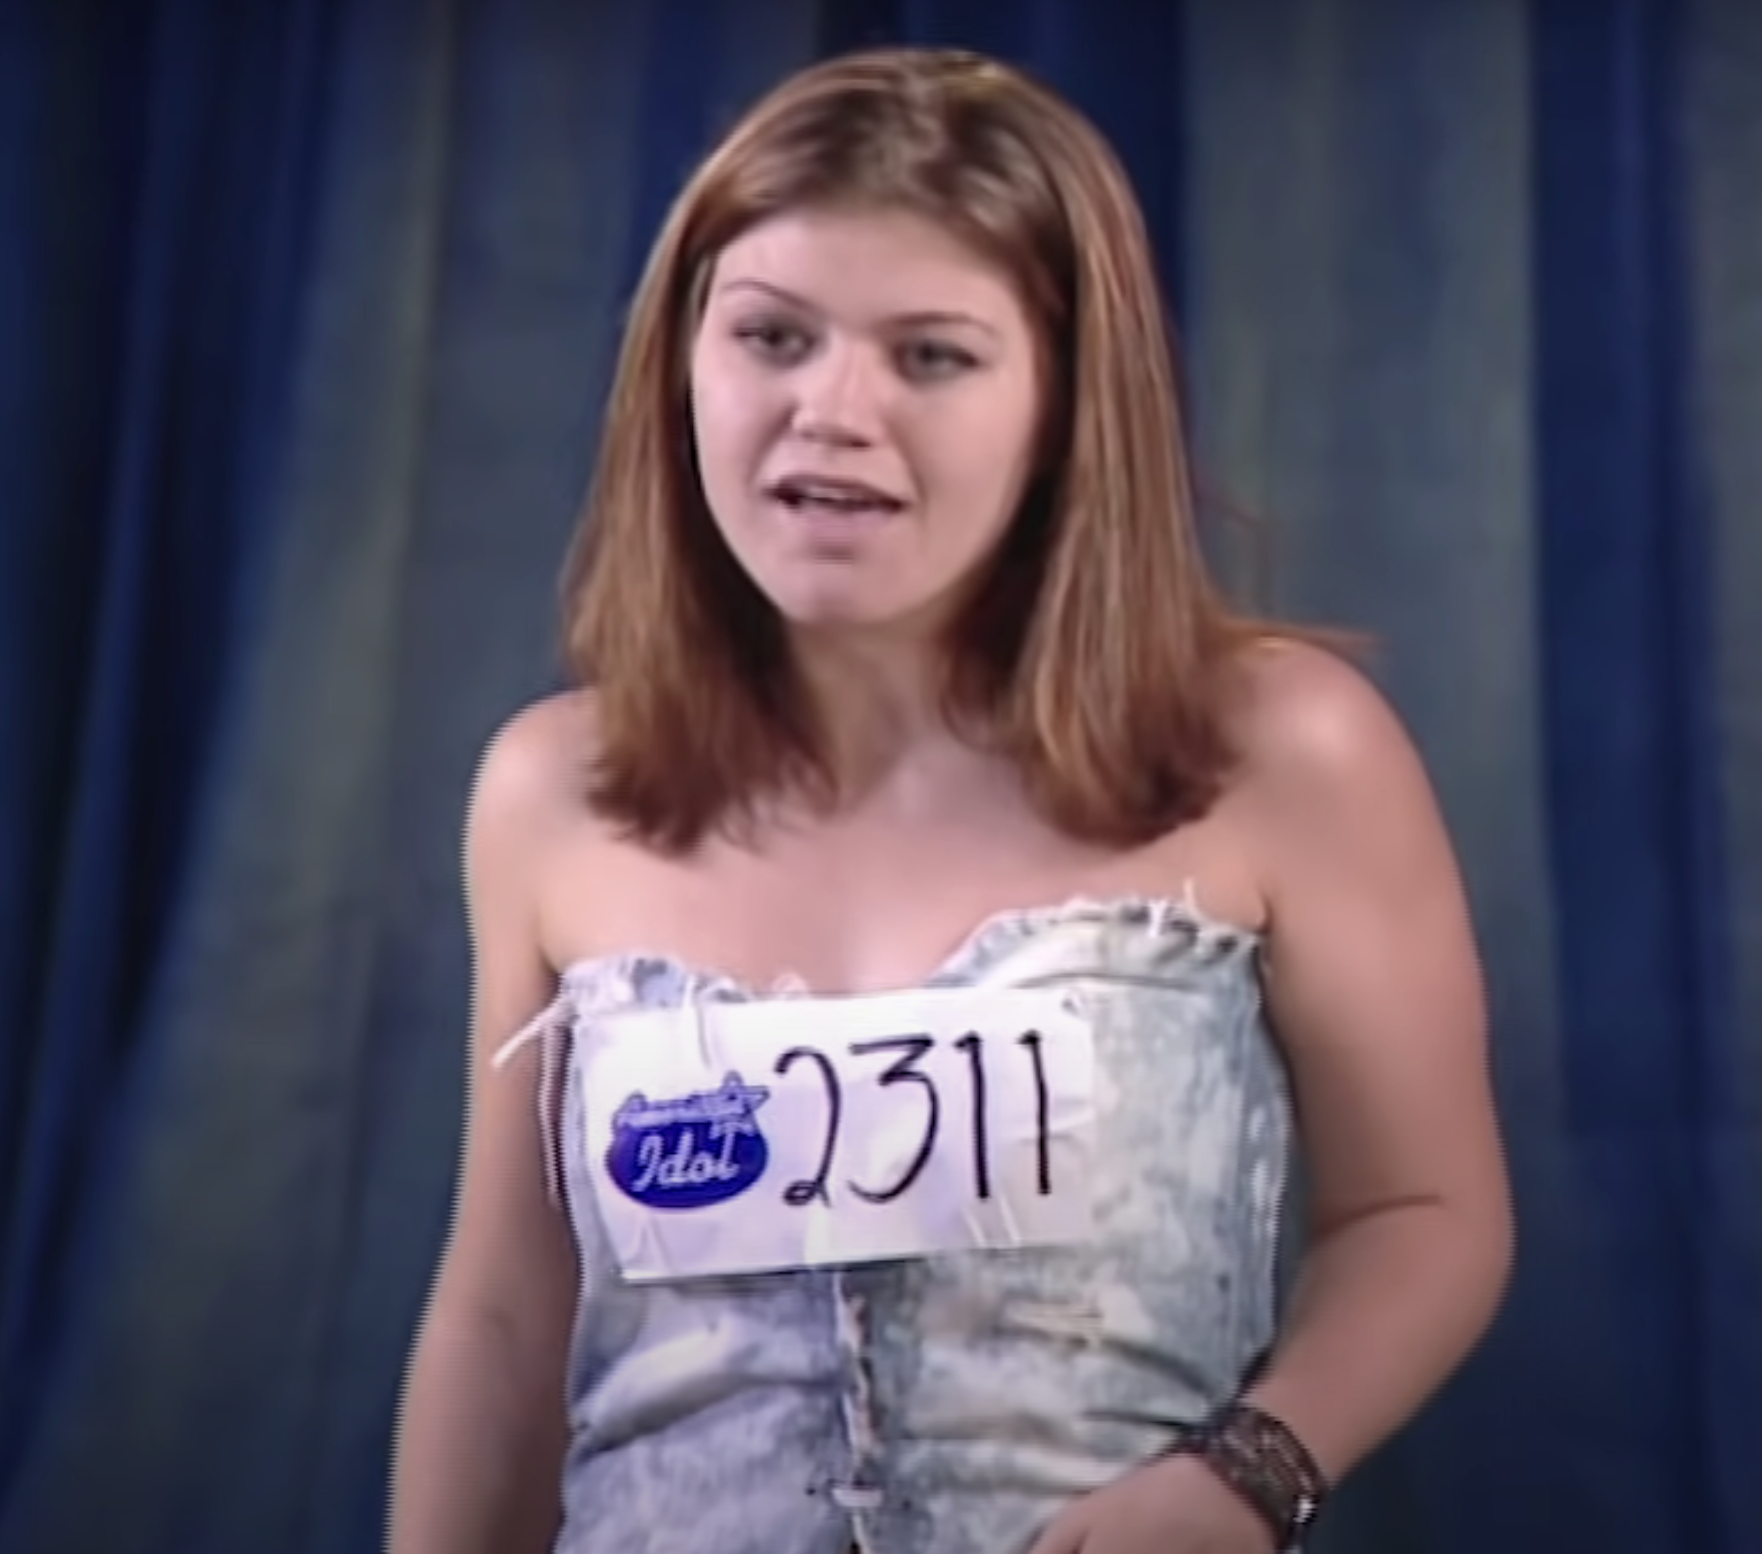 American Idol contestant